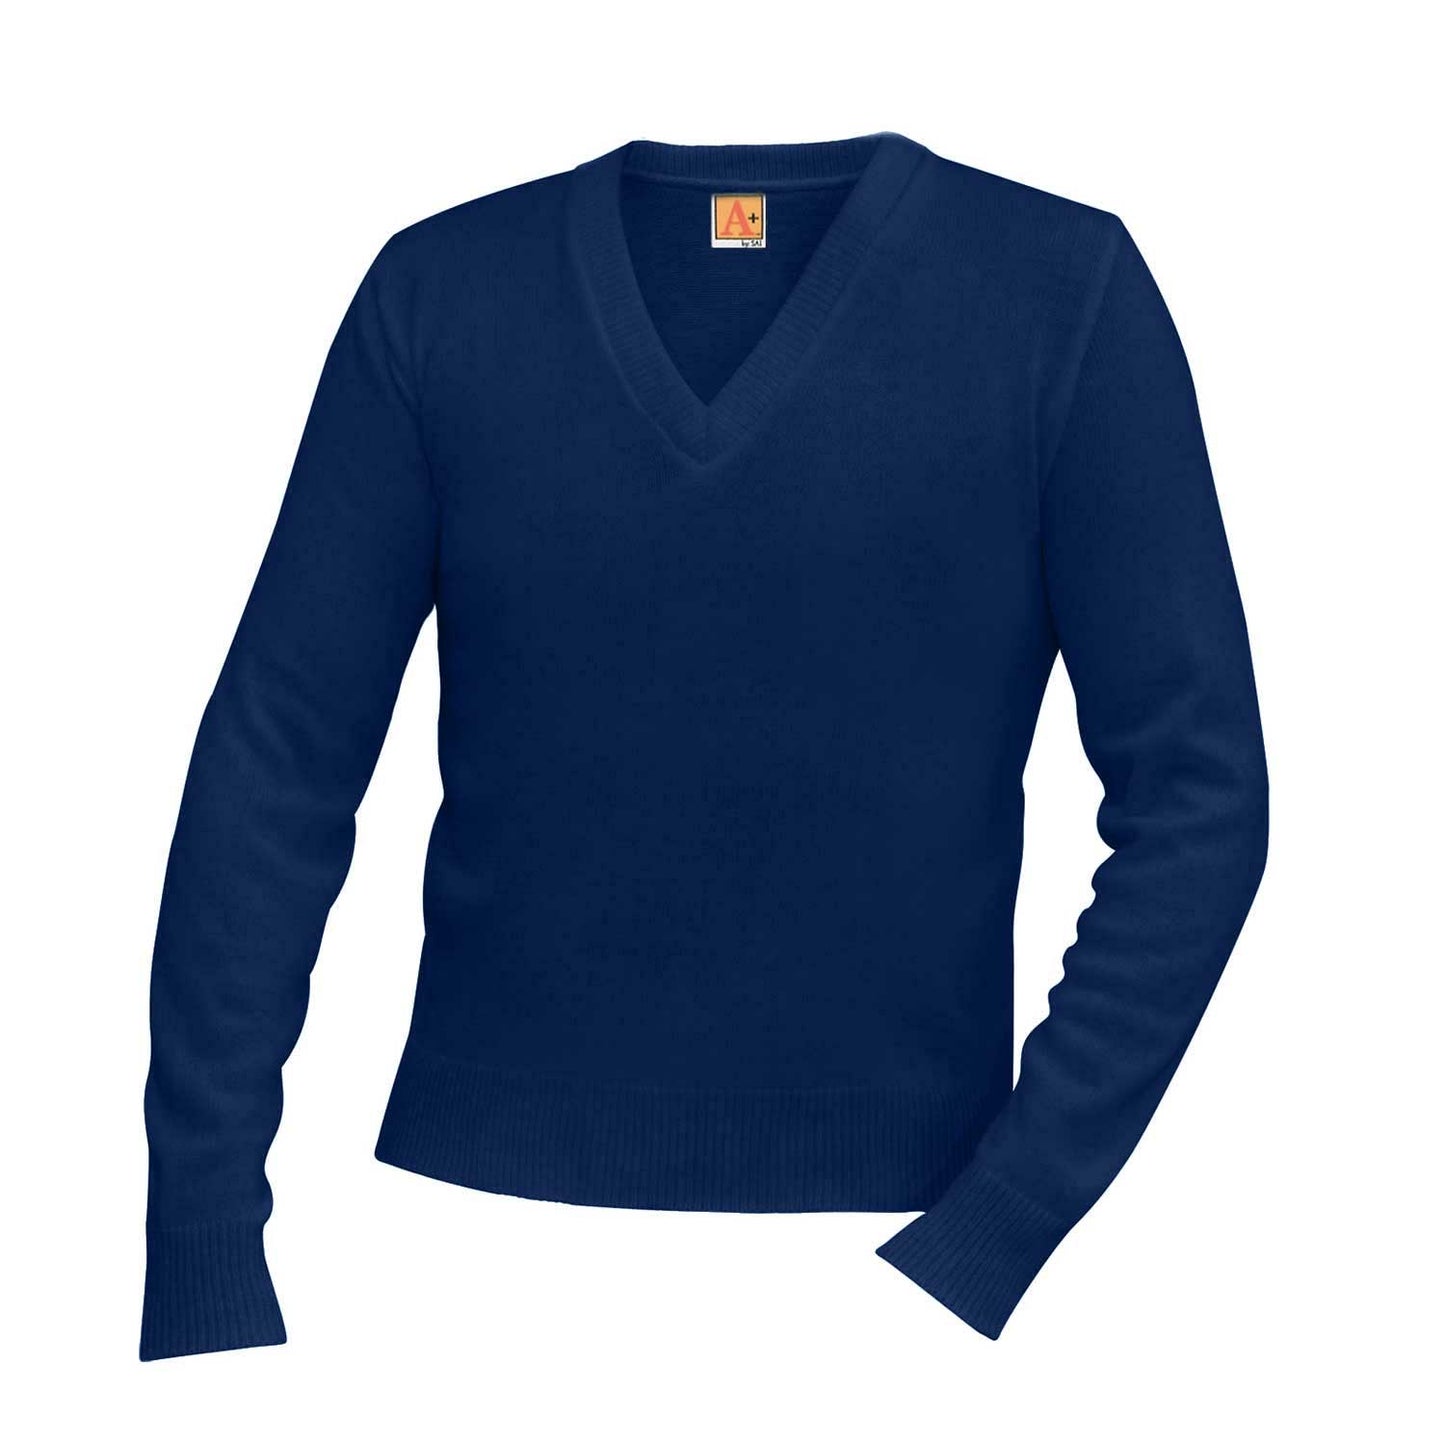 Unisex V-Neck Pullover Jersey Knit Sweater w/Logo - 1103